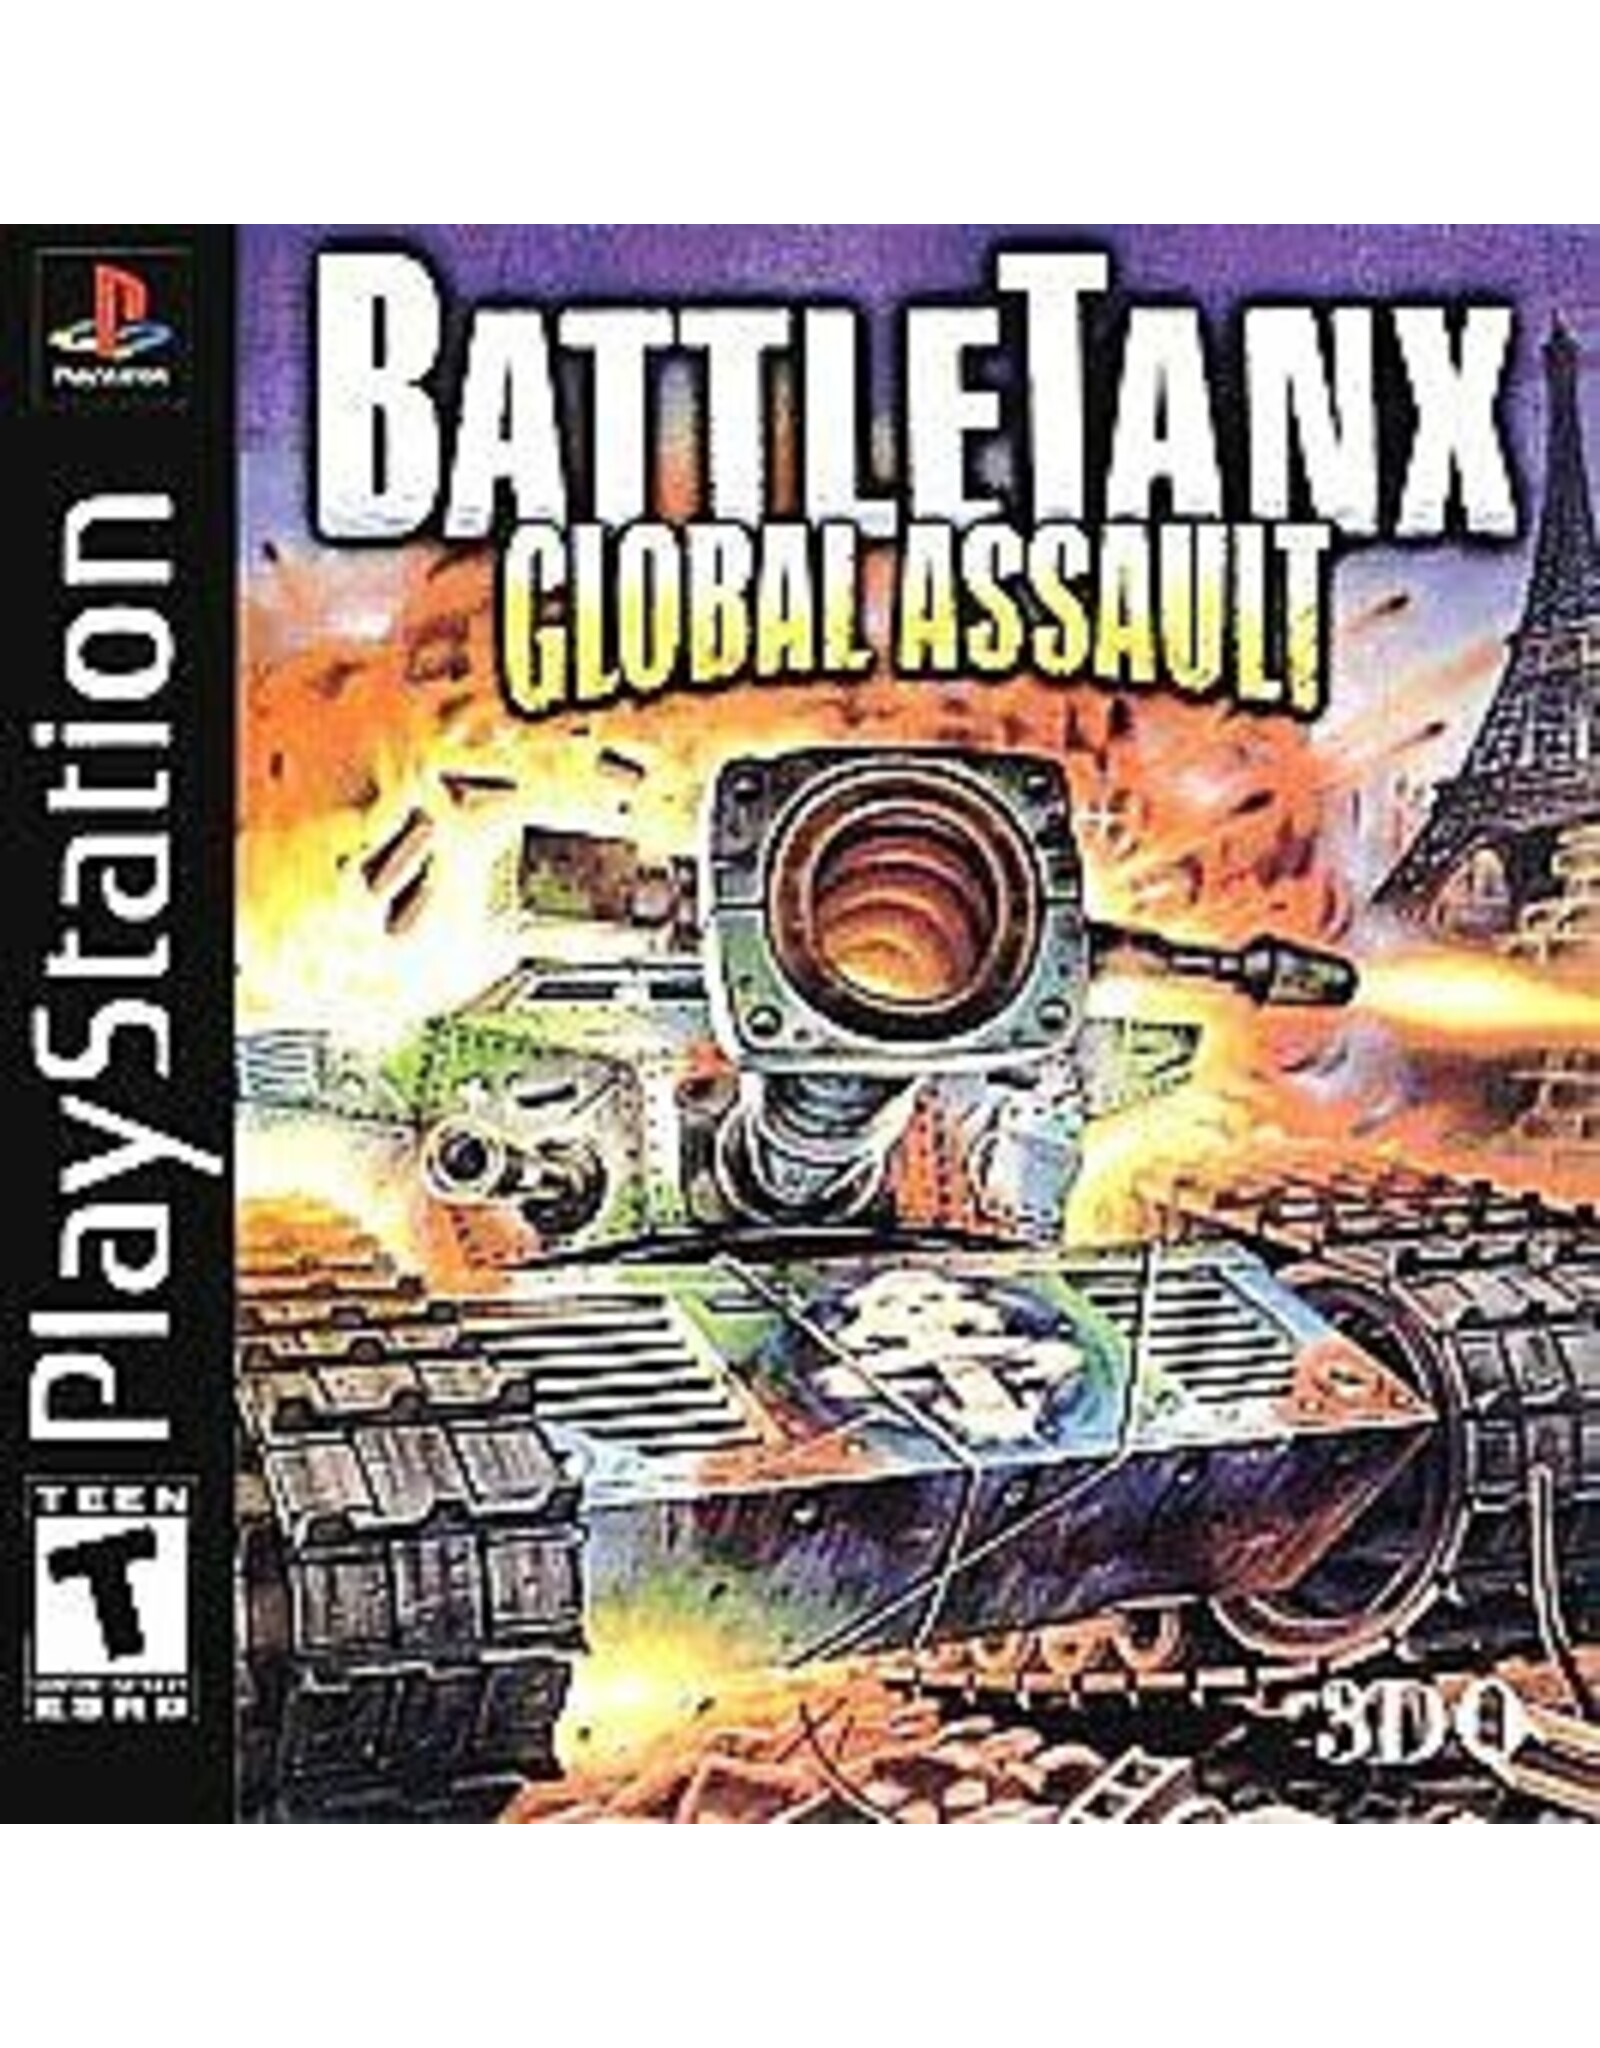 Playstation Battletanx Global Assault (No Manual)